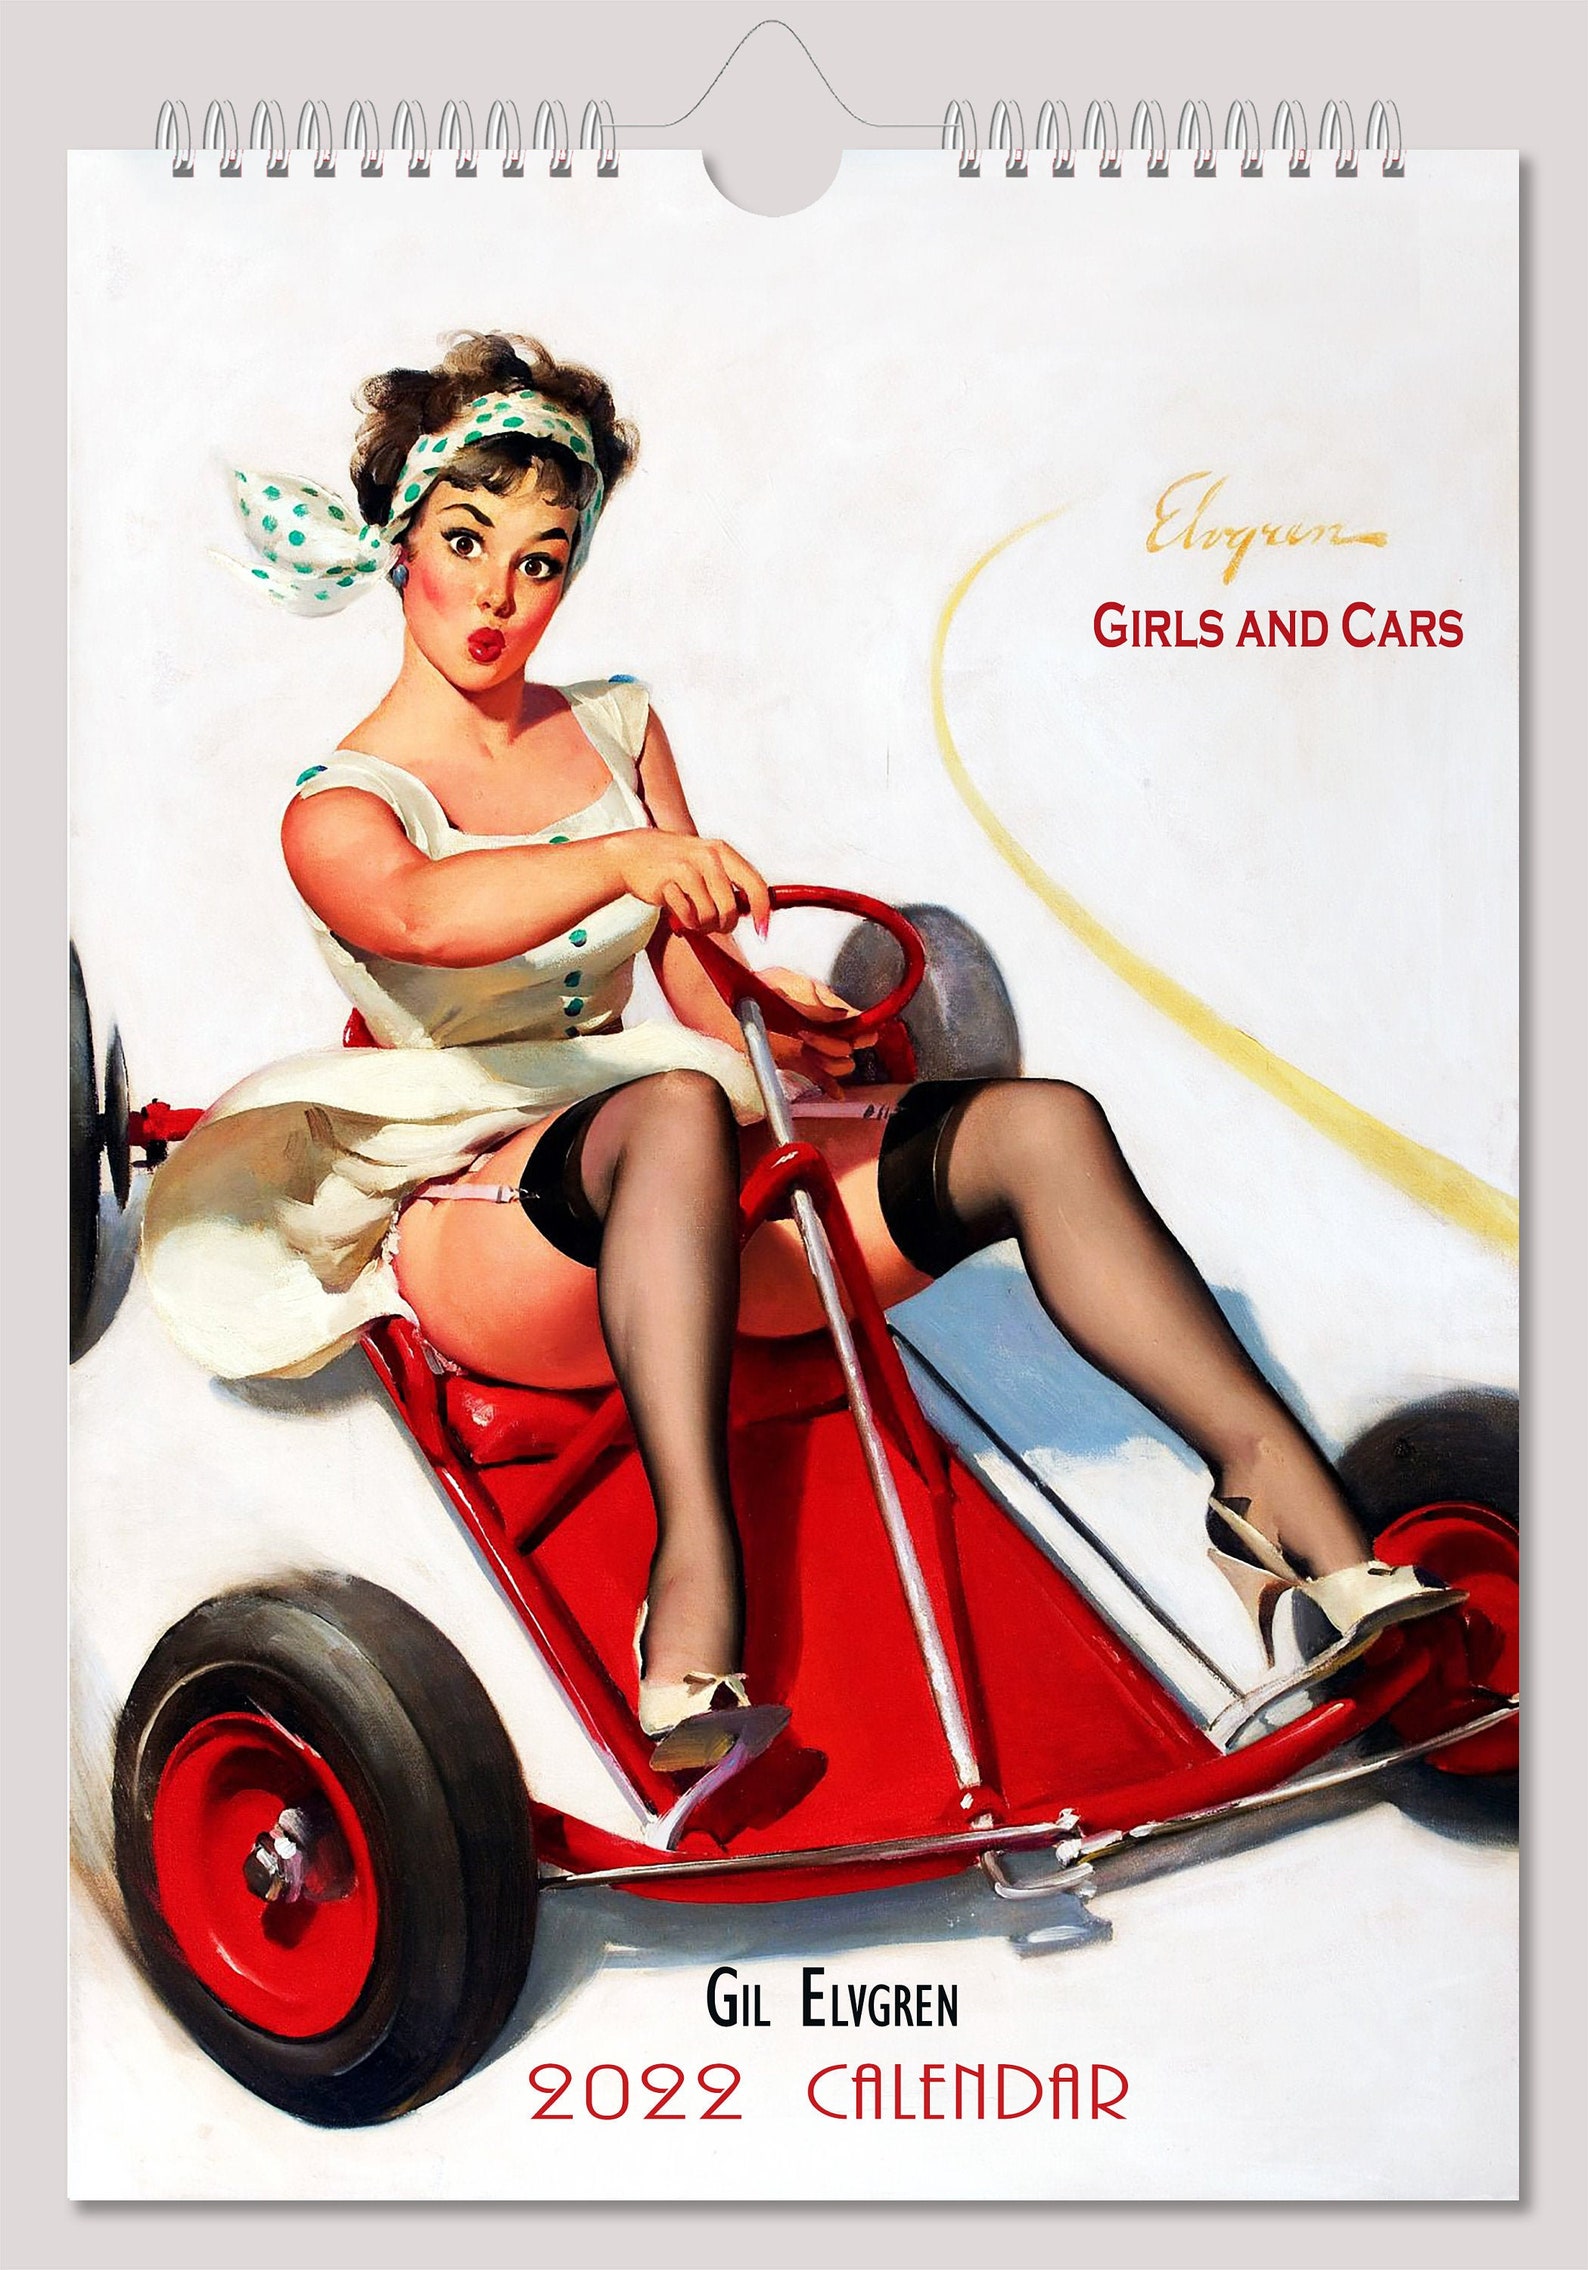 gil-elvgren-wall-calendar-2022-pin-up-girl-retro-vintage-etsy